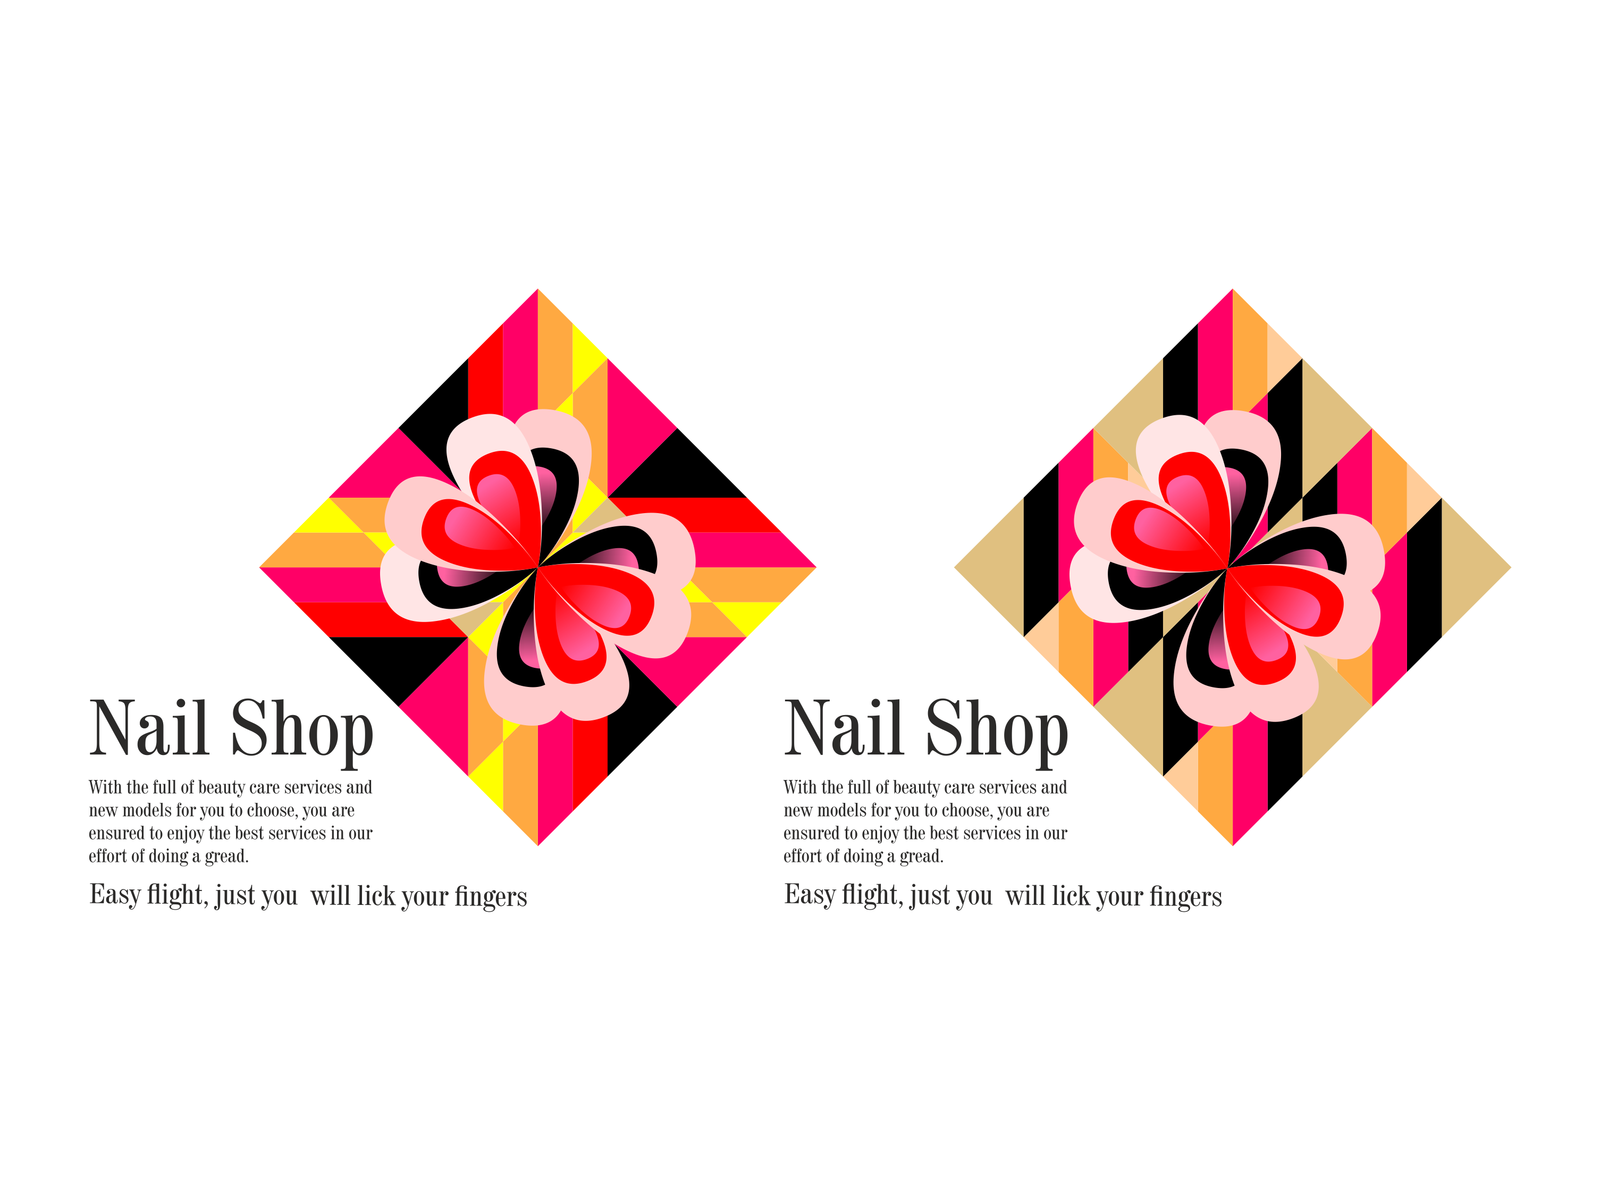 5. Artistic Nail Shop - wide 4